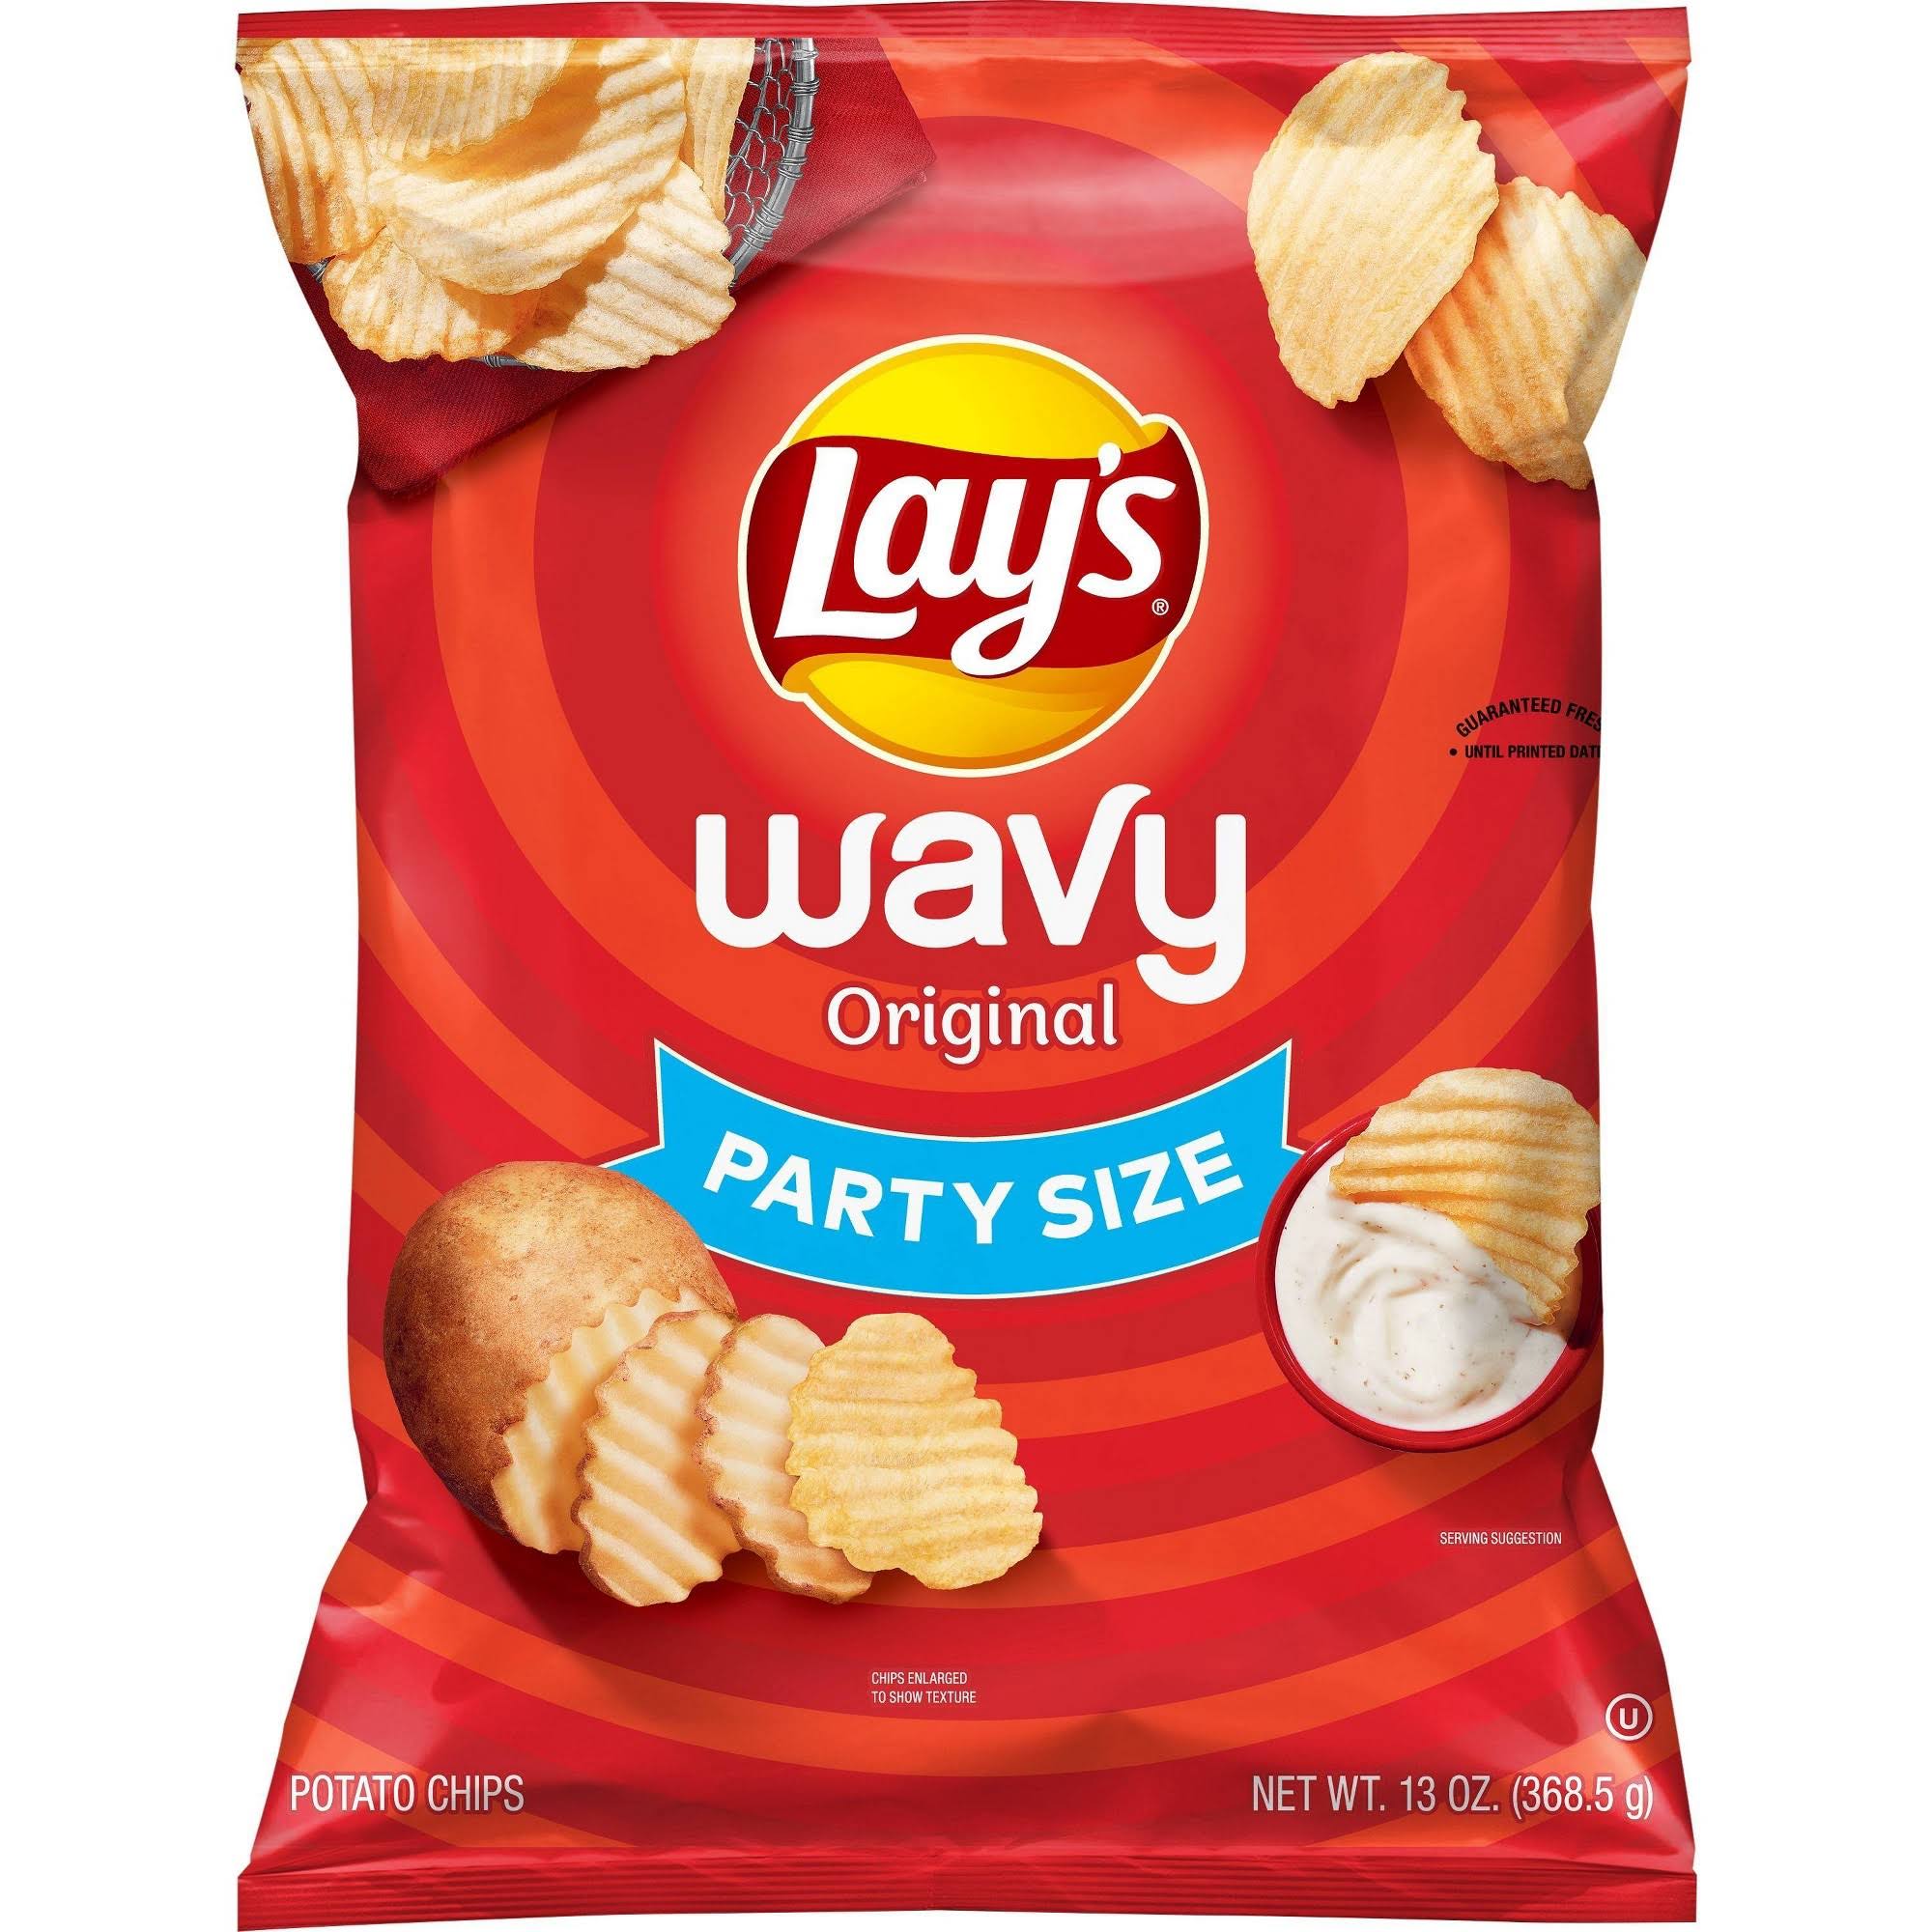 Lay's Wavy Potato Chips, Original, Party Size - 13 oz